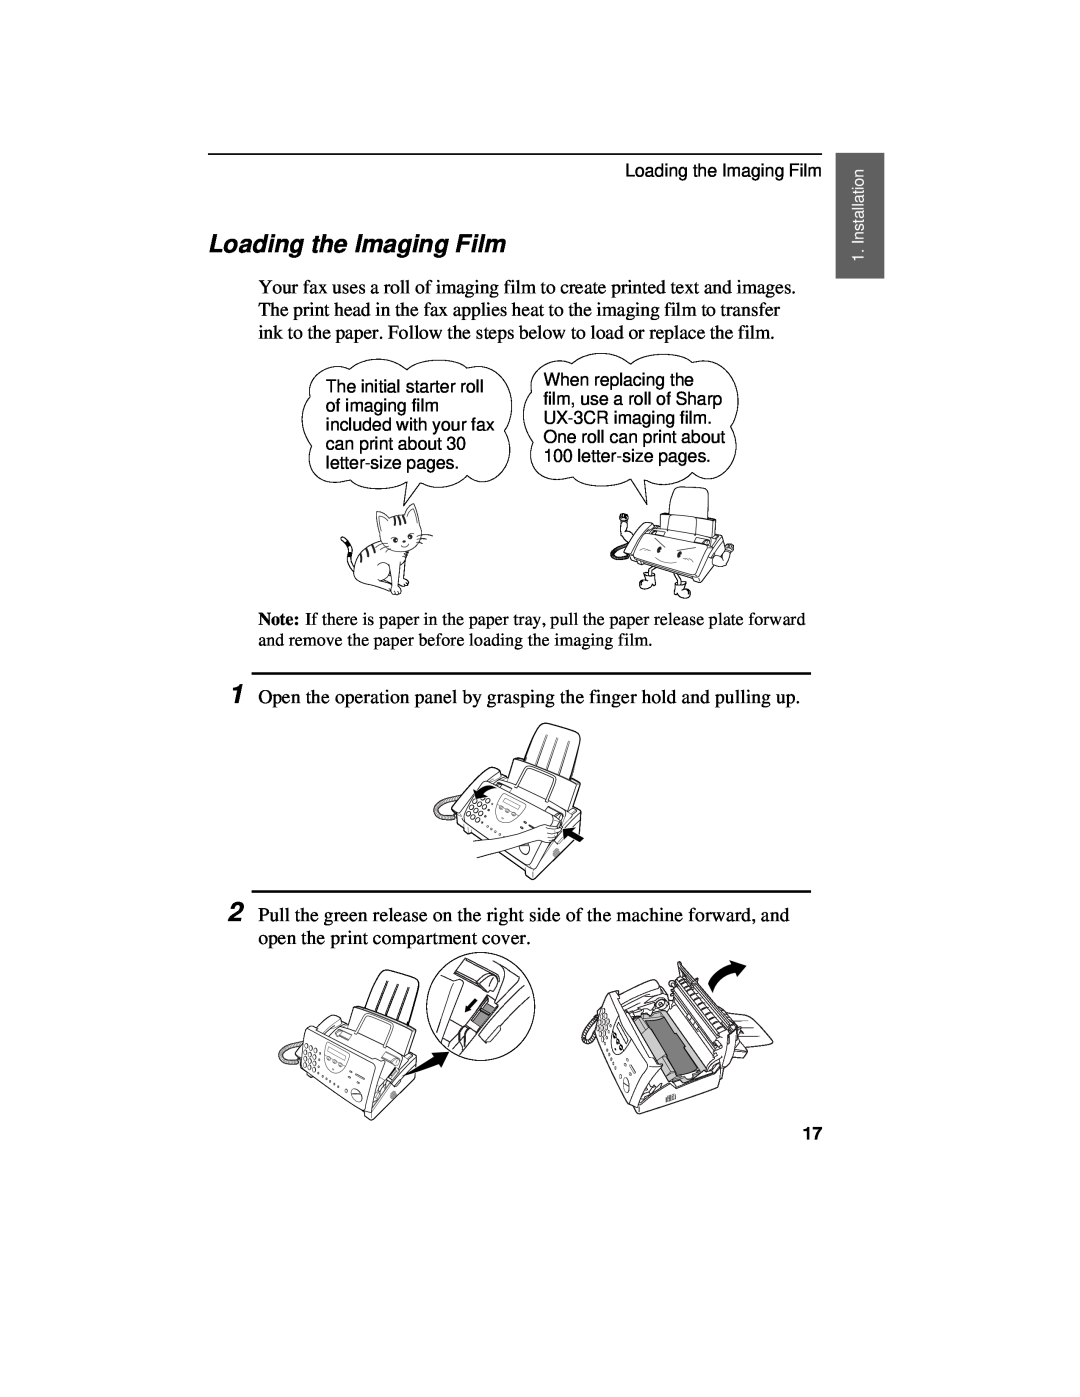 Sharp UX-460 operation manual Loading the Imaging Film 